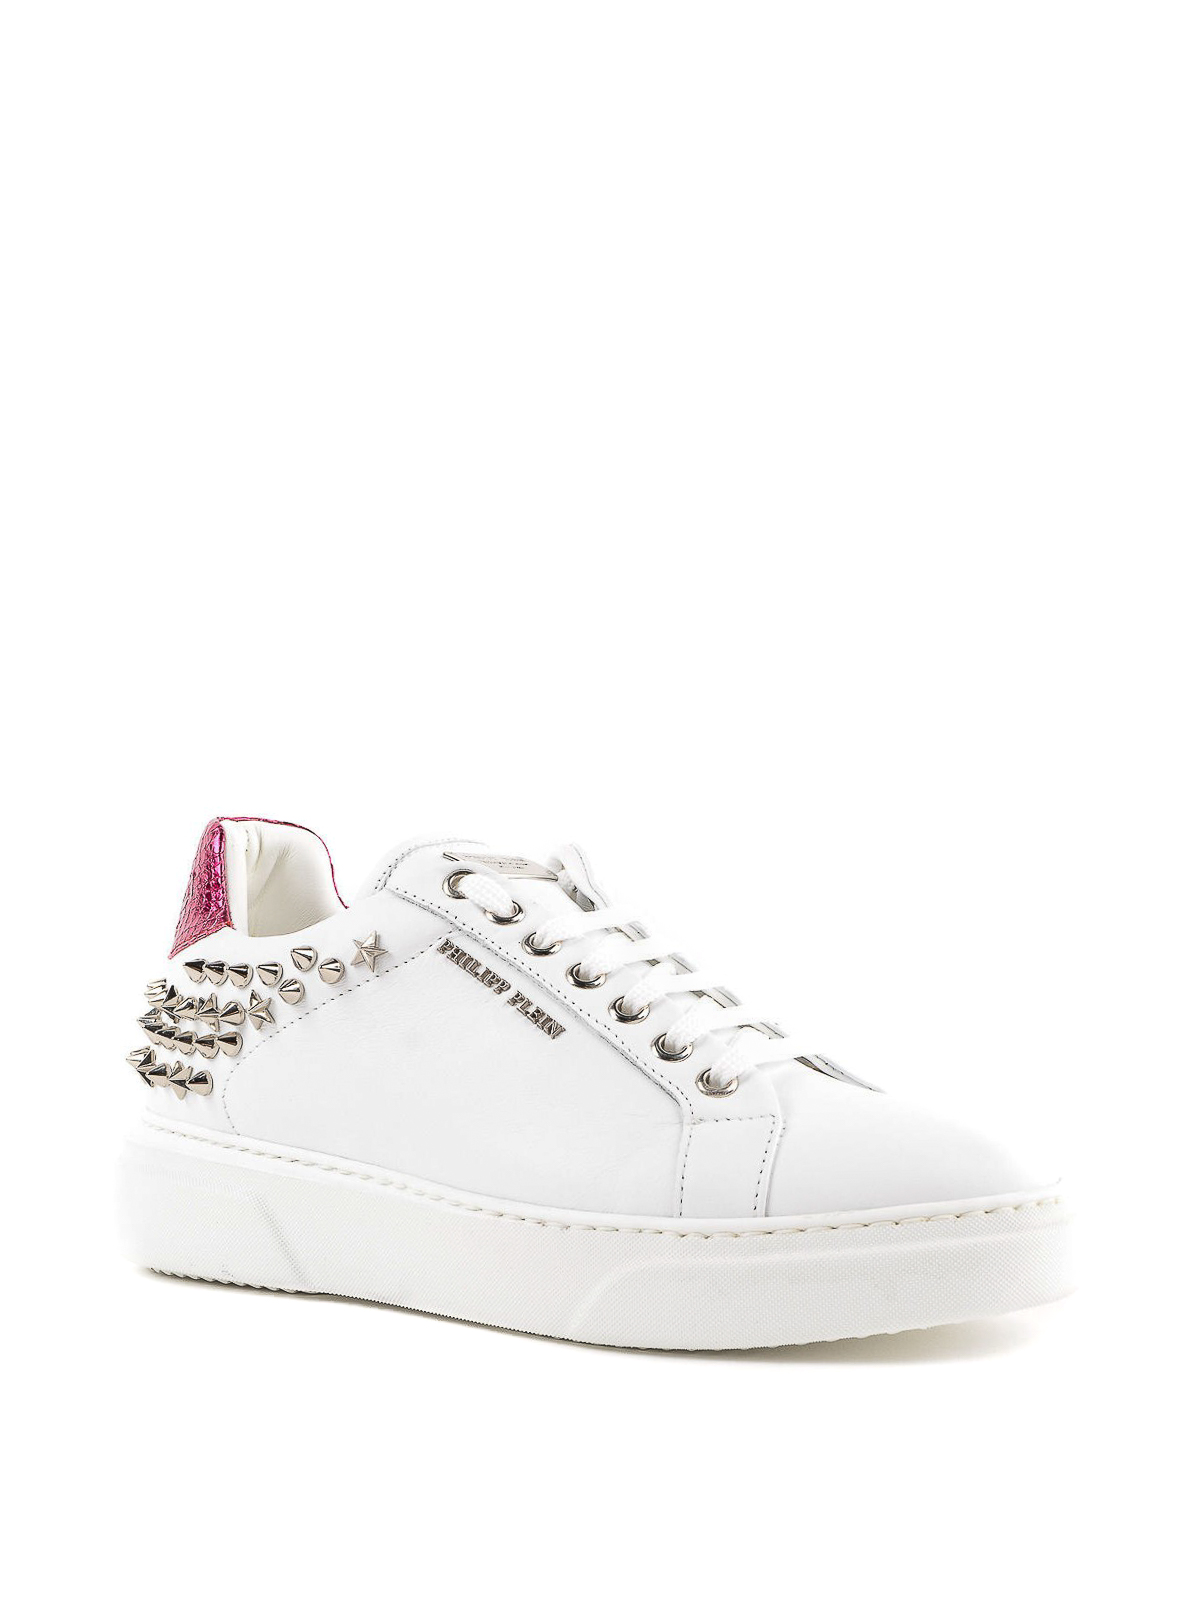 cute white sneakers